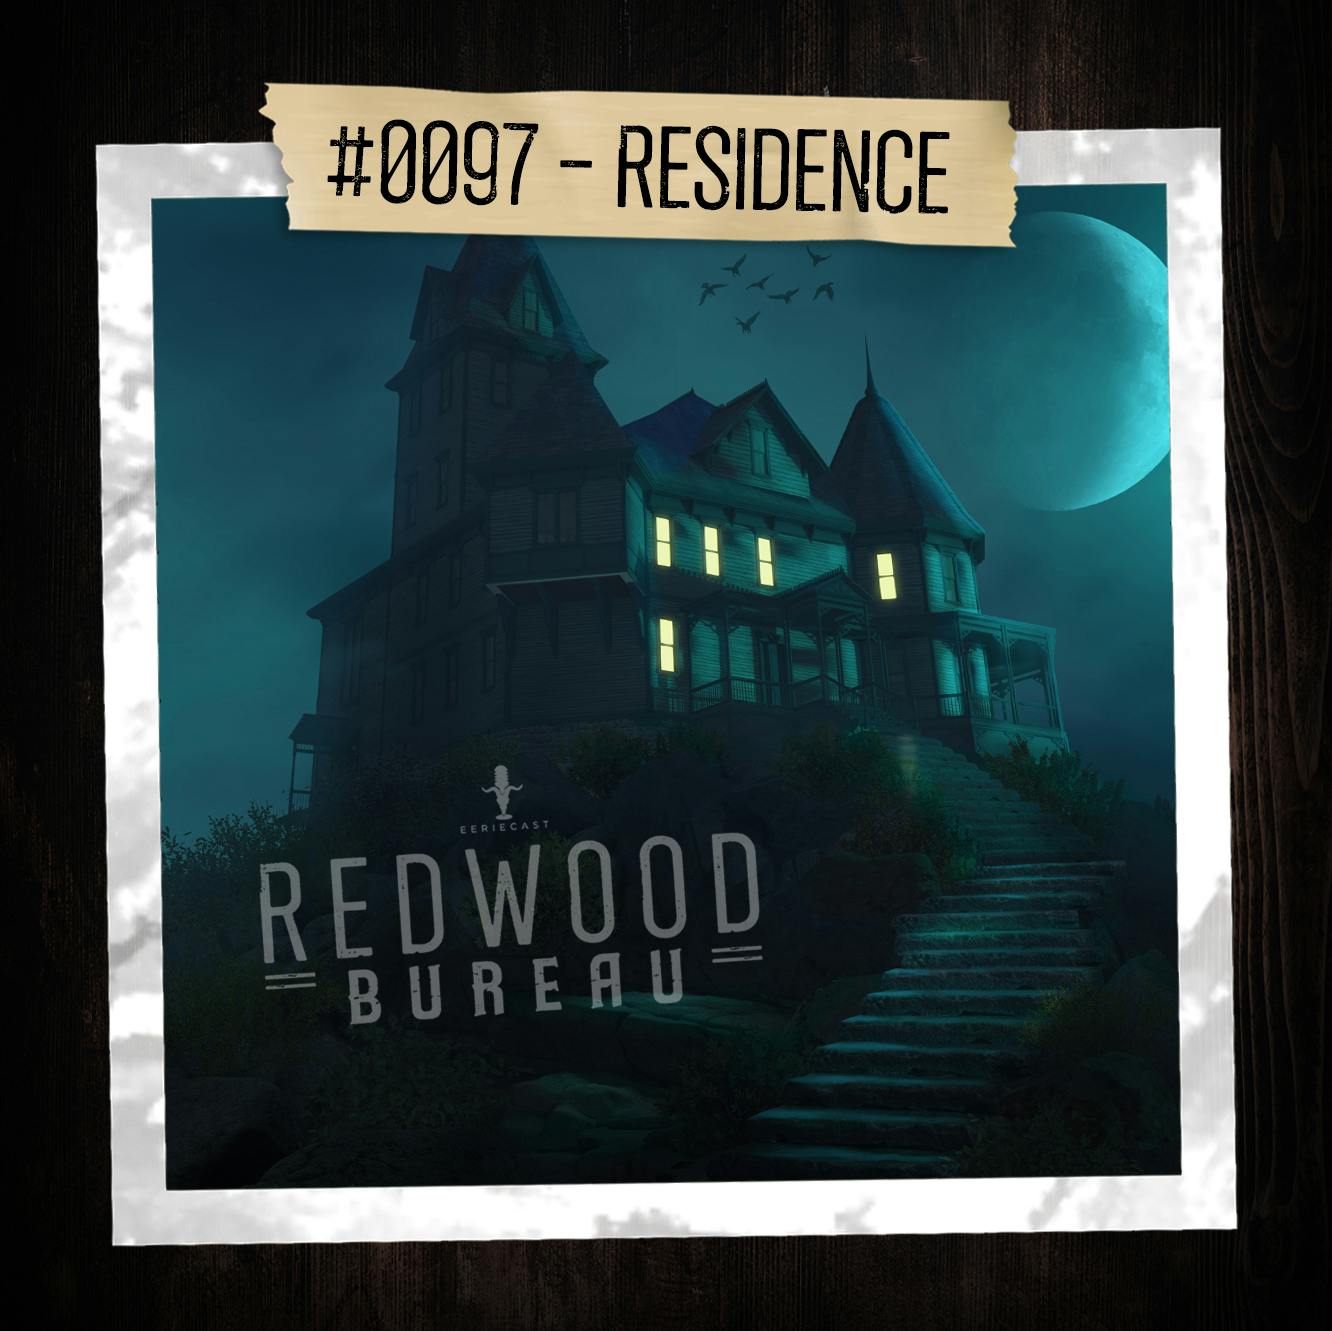 "RESIDENCE" - Redwood Bureau Phenomenon #0097